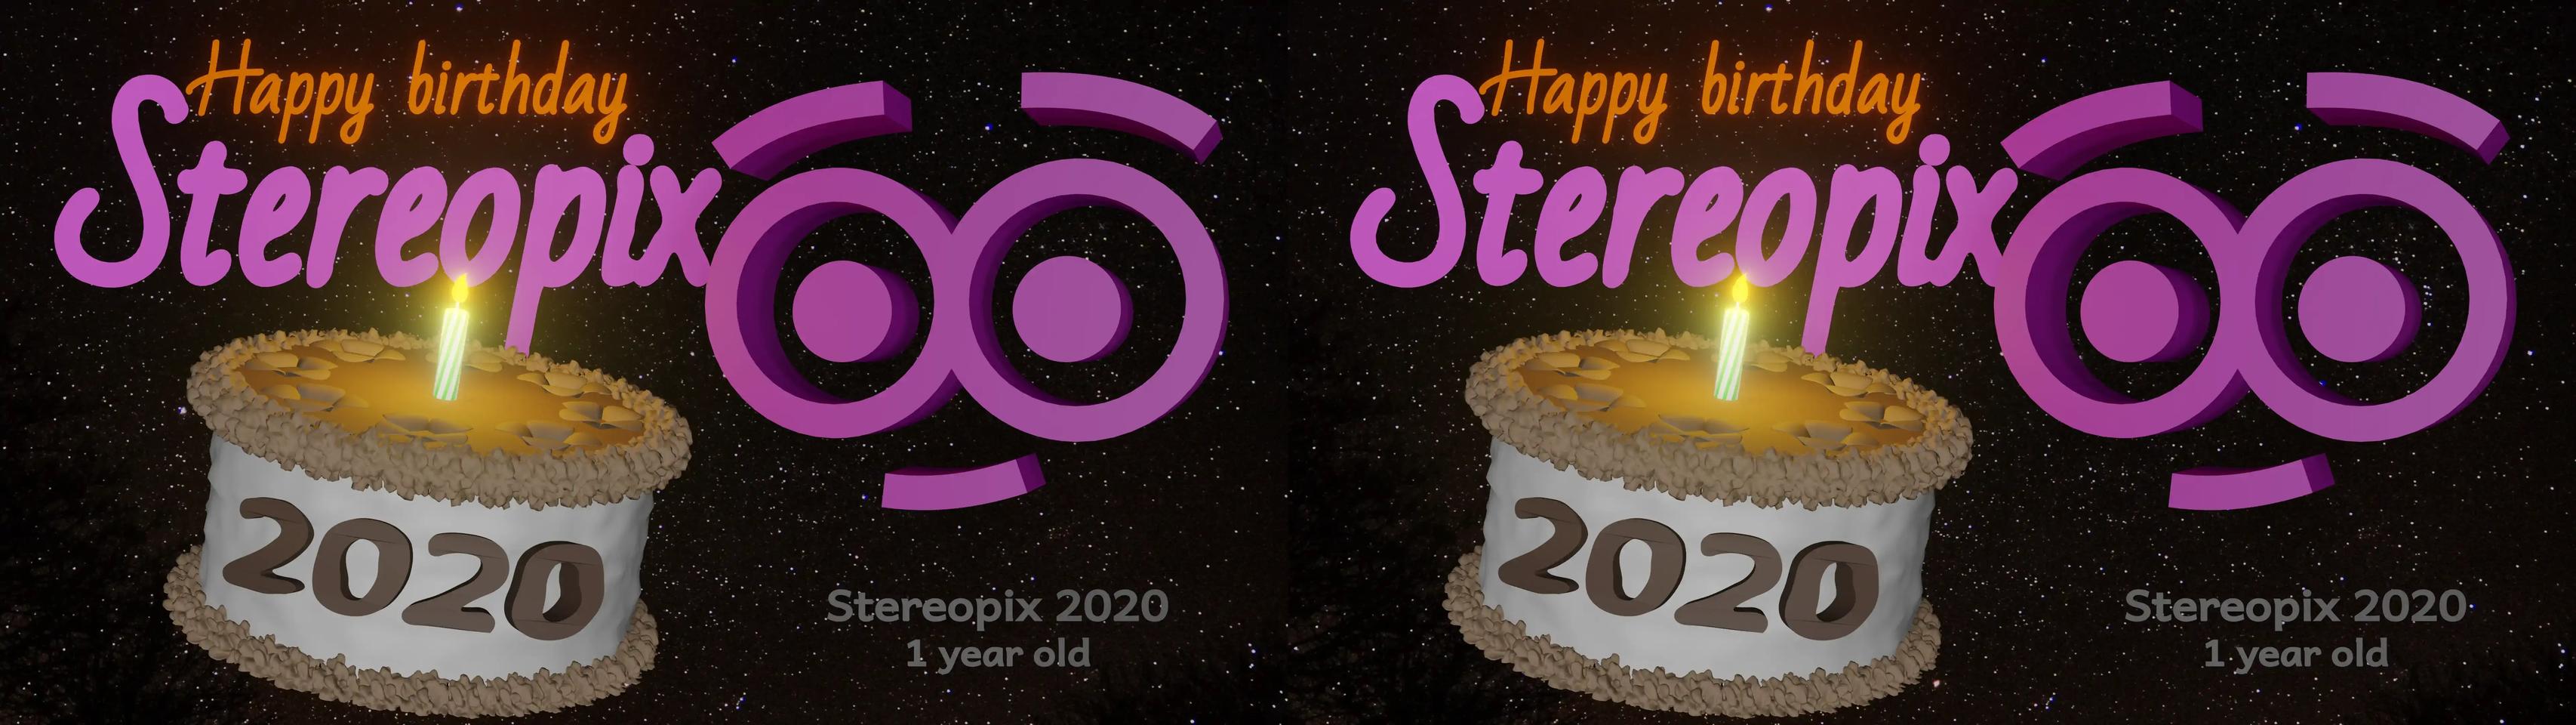 Happy birthday Stereopix